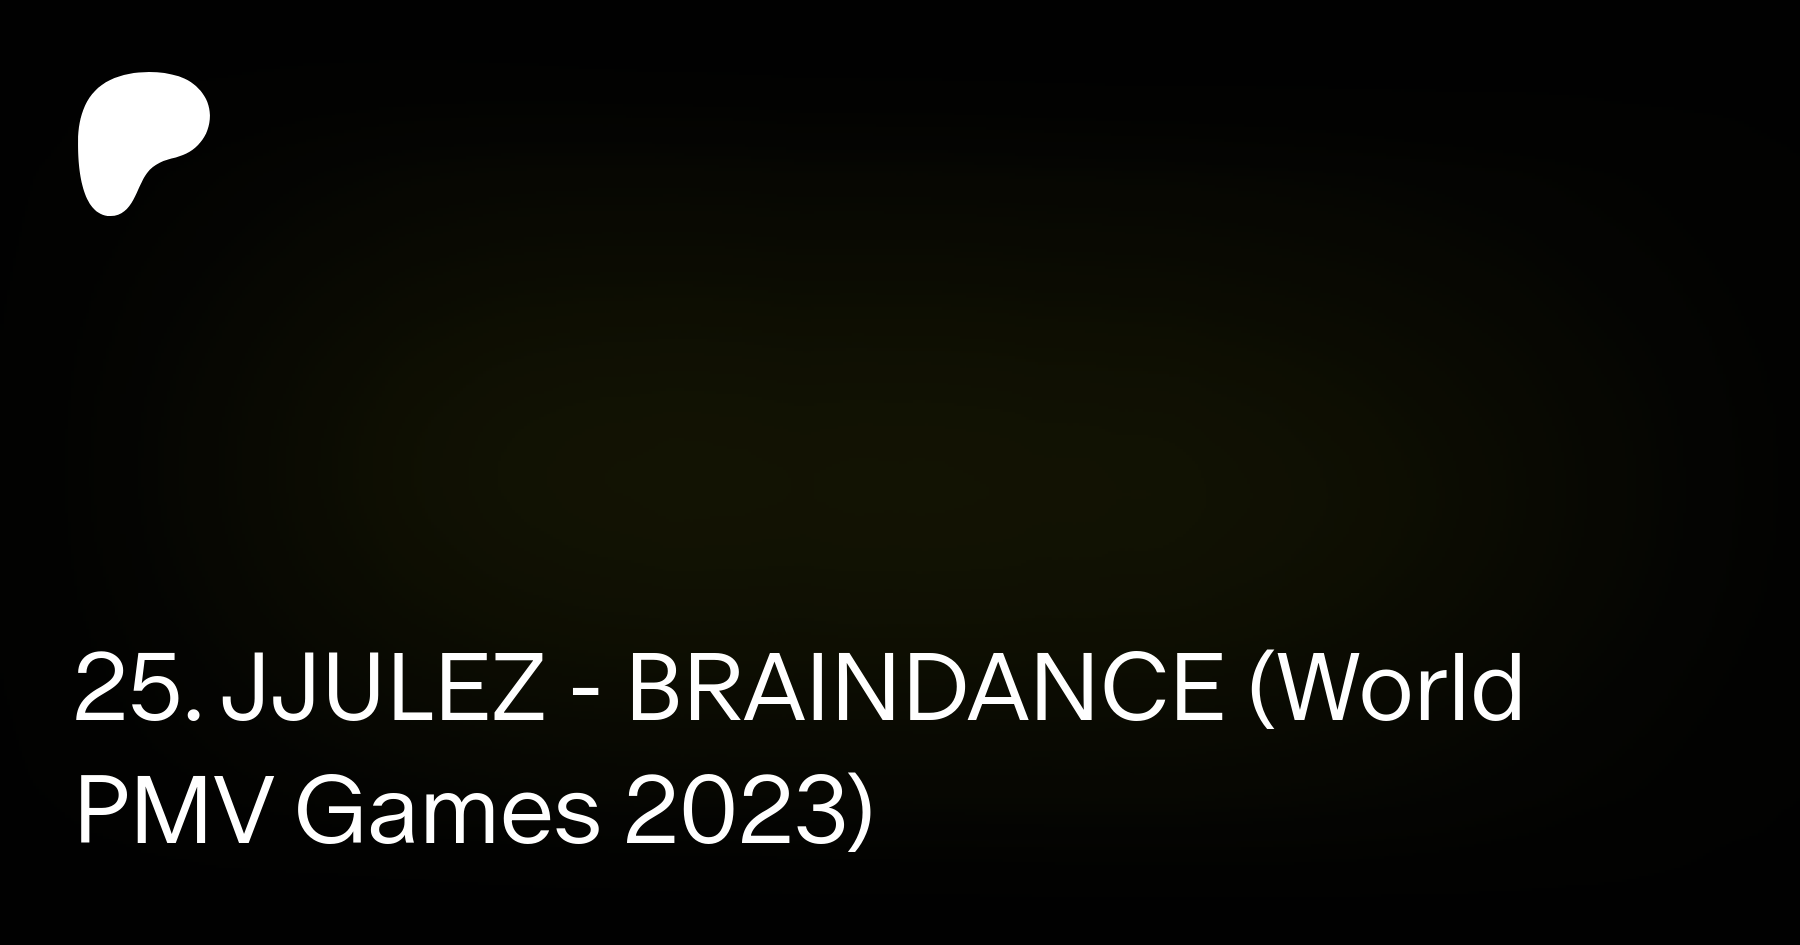 Braindance by jjulez